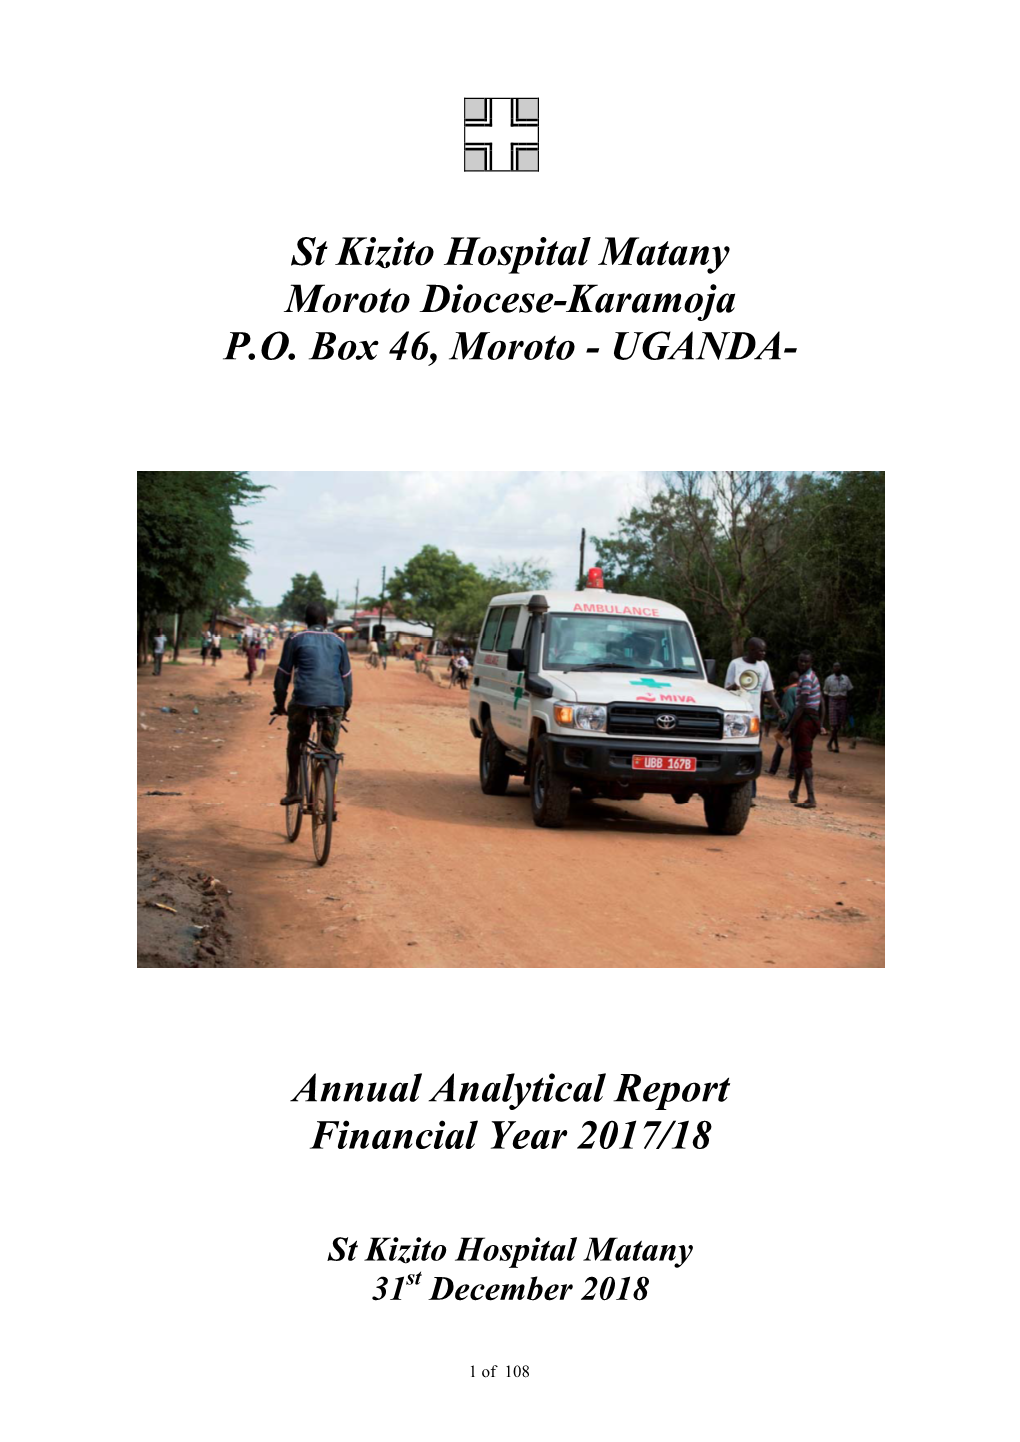 UGANDA- Annual Analytical Report Financial Year 2017